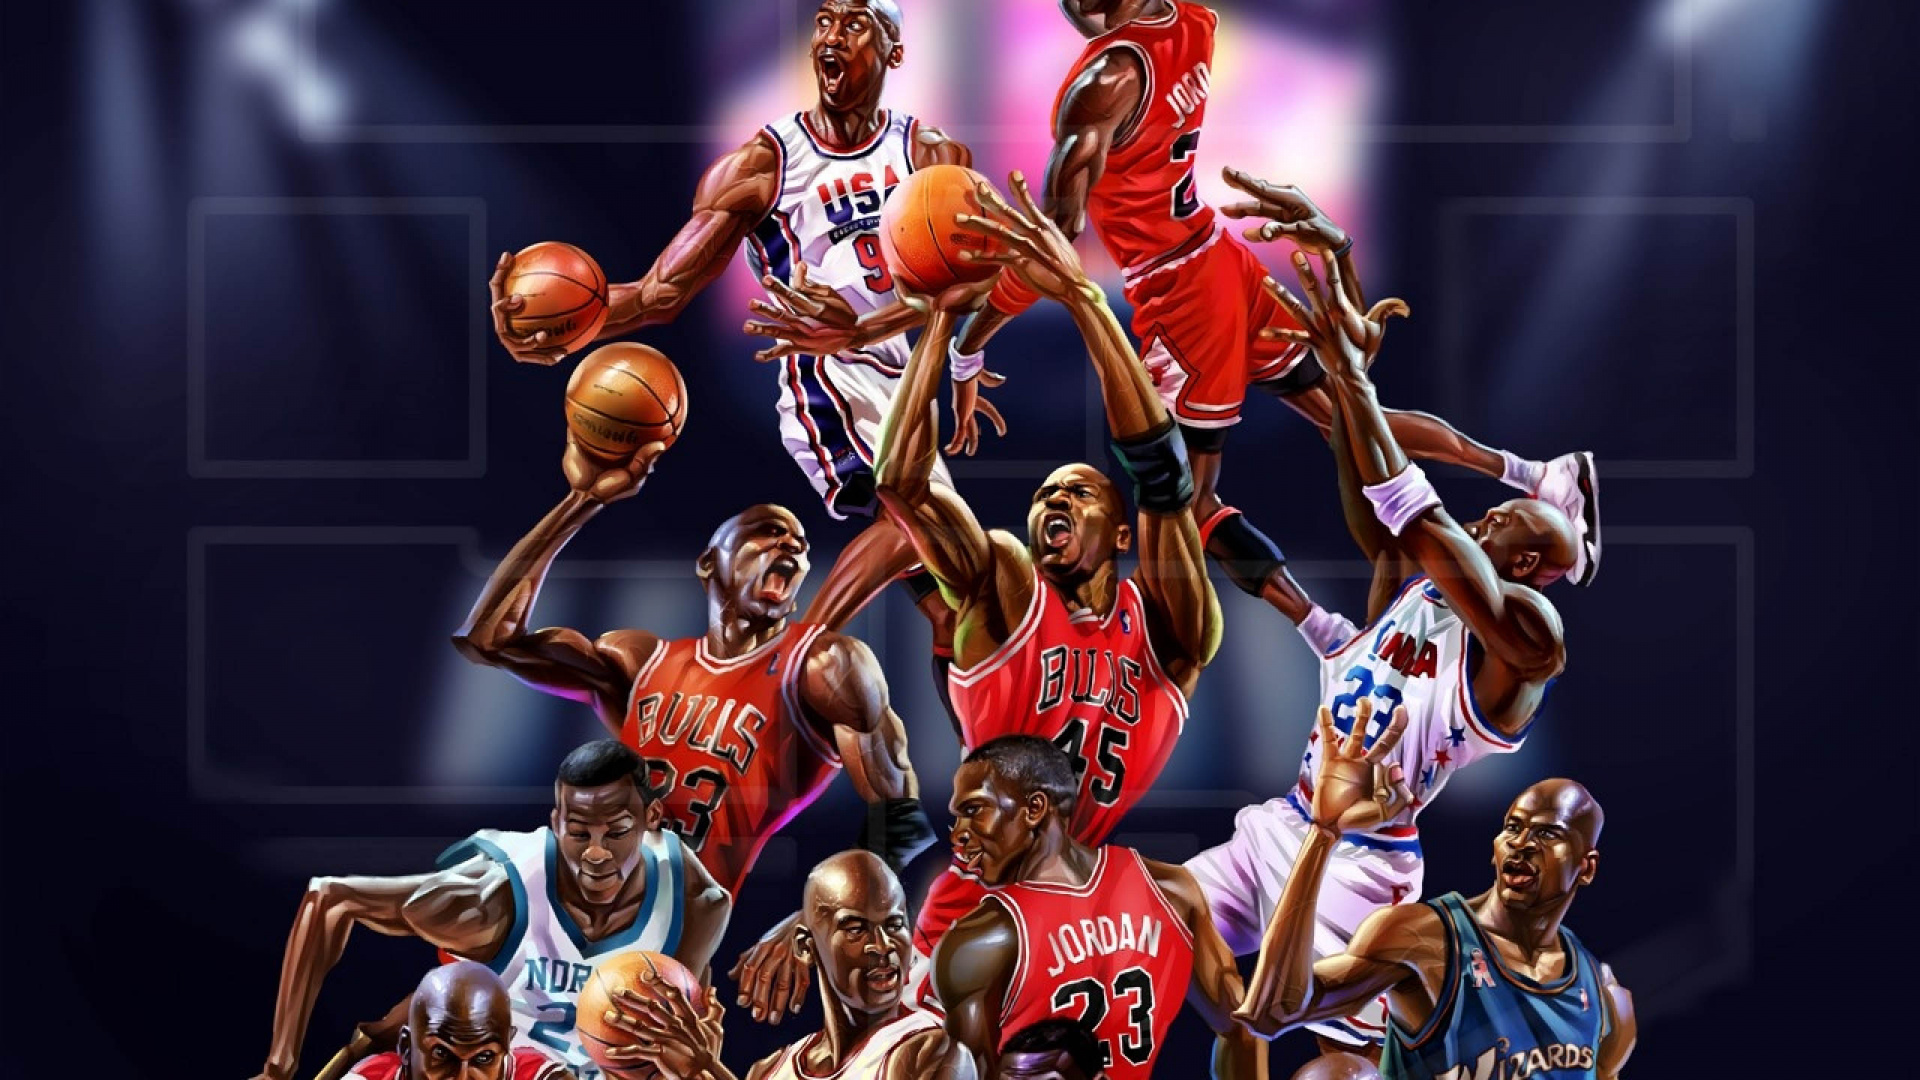 Обои 1920x1080 Баскетбол, баскетболист, команда, игрок, командный вид спорт...